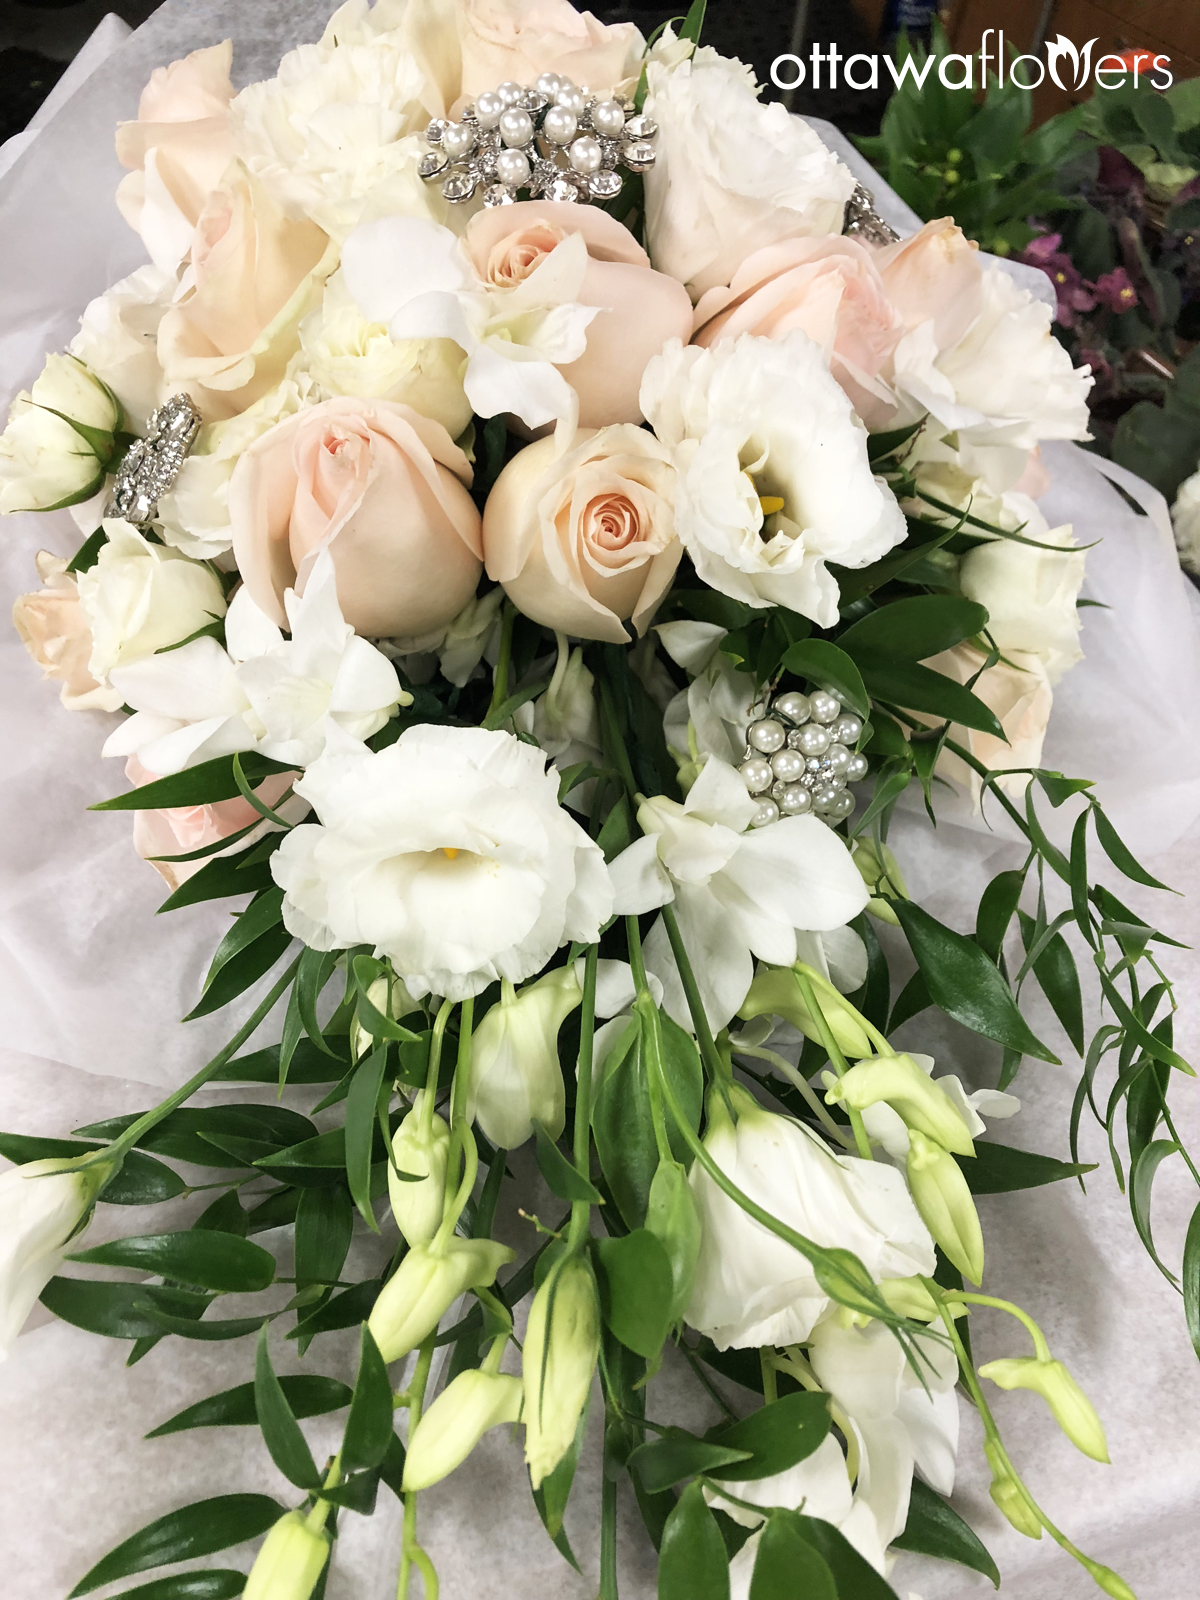 Ottawa Flowers Wedding Gallery